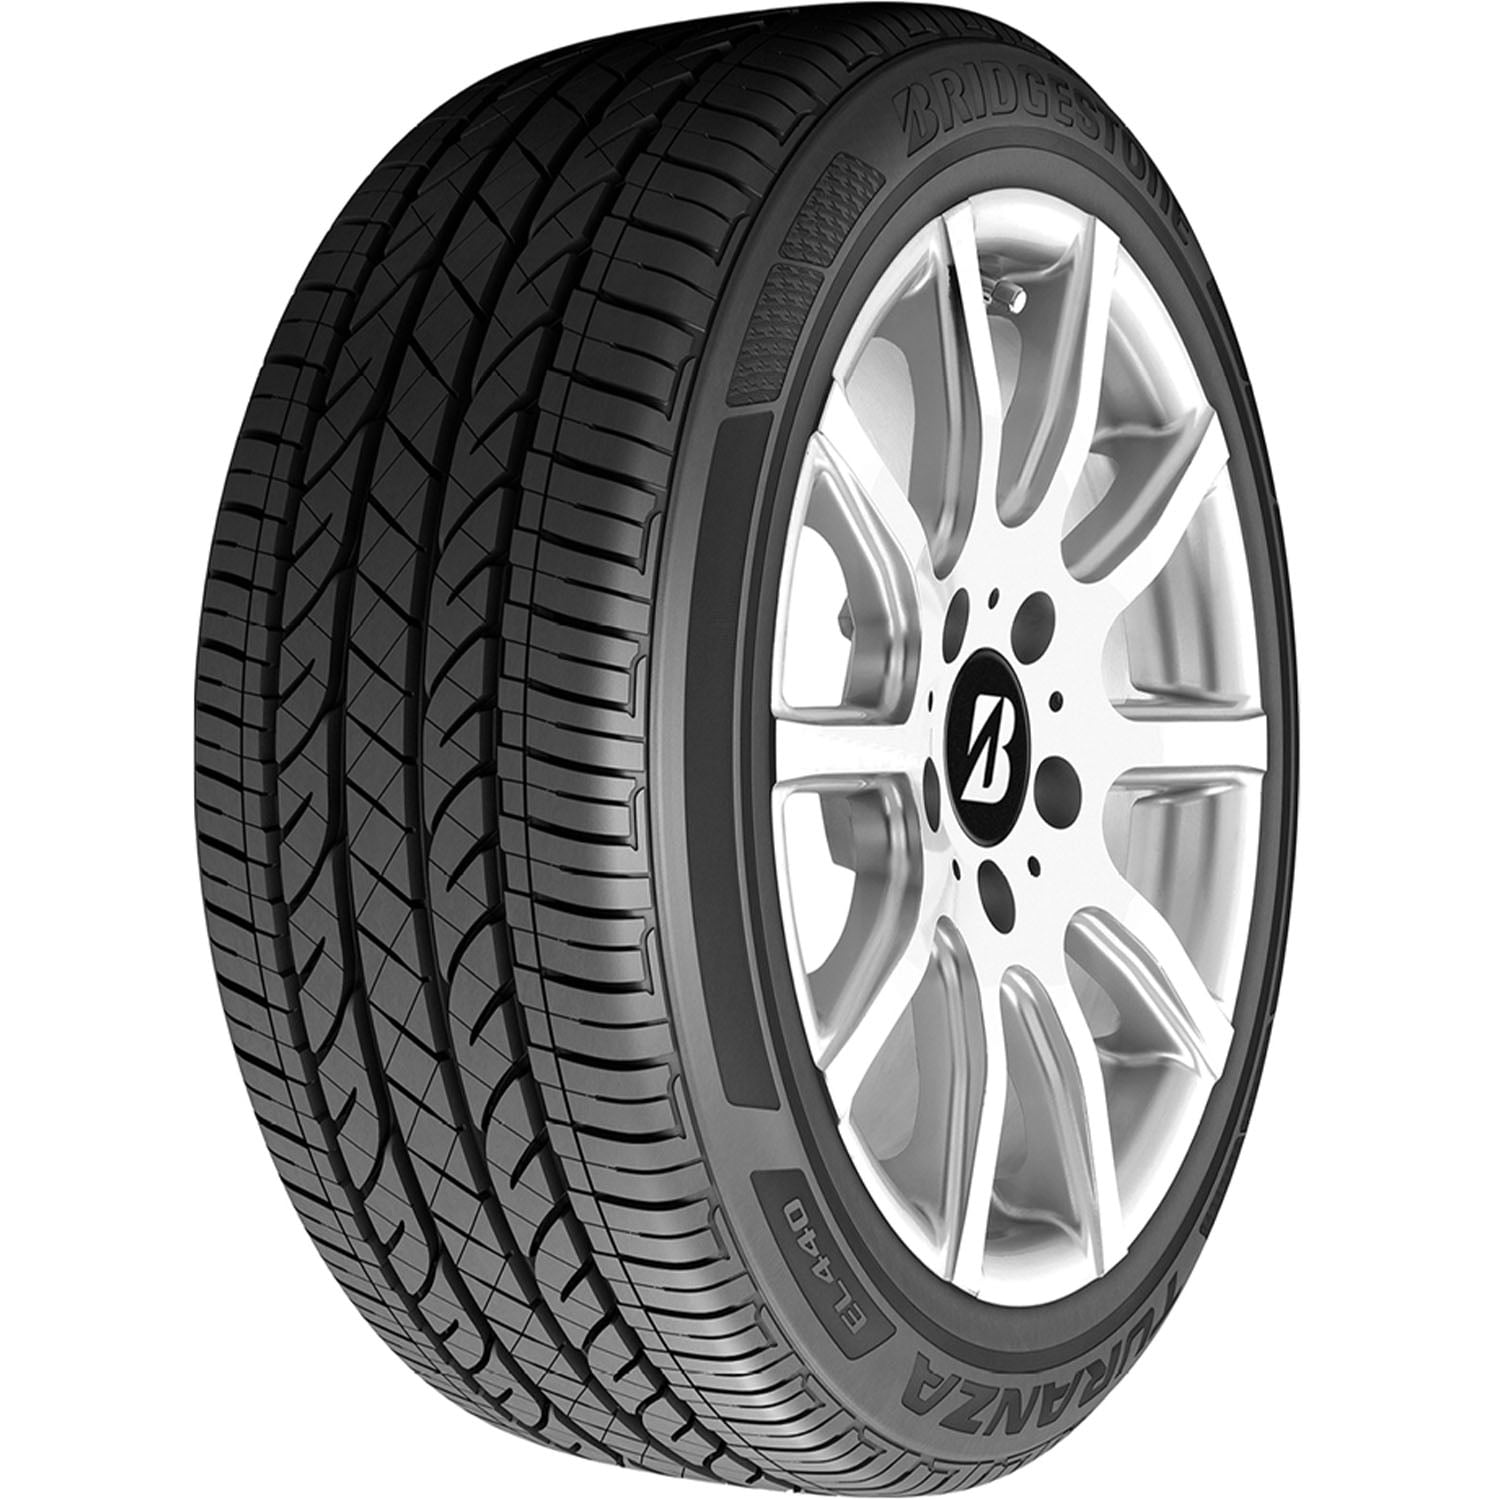 Bridgestone Turanza EL440 All Season 215/65R16 98H Passenger Tire